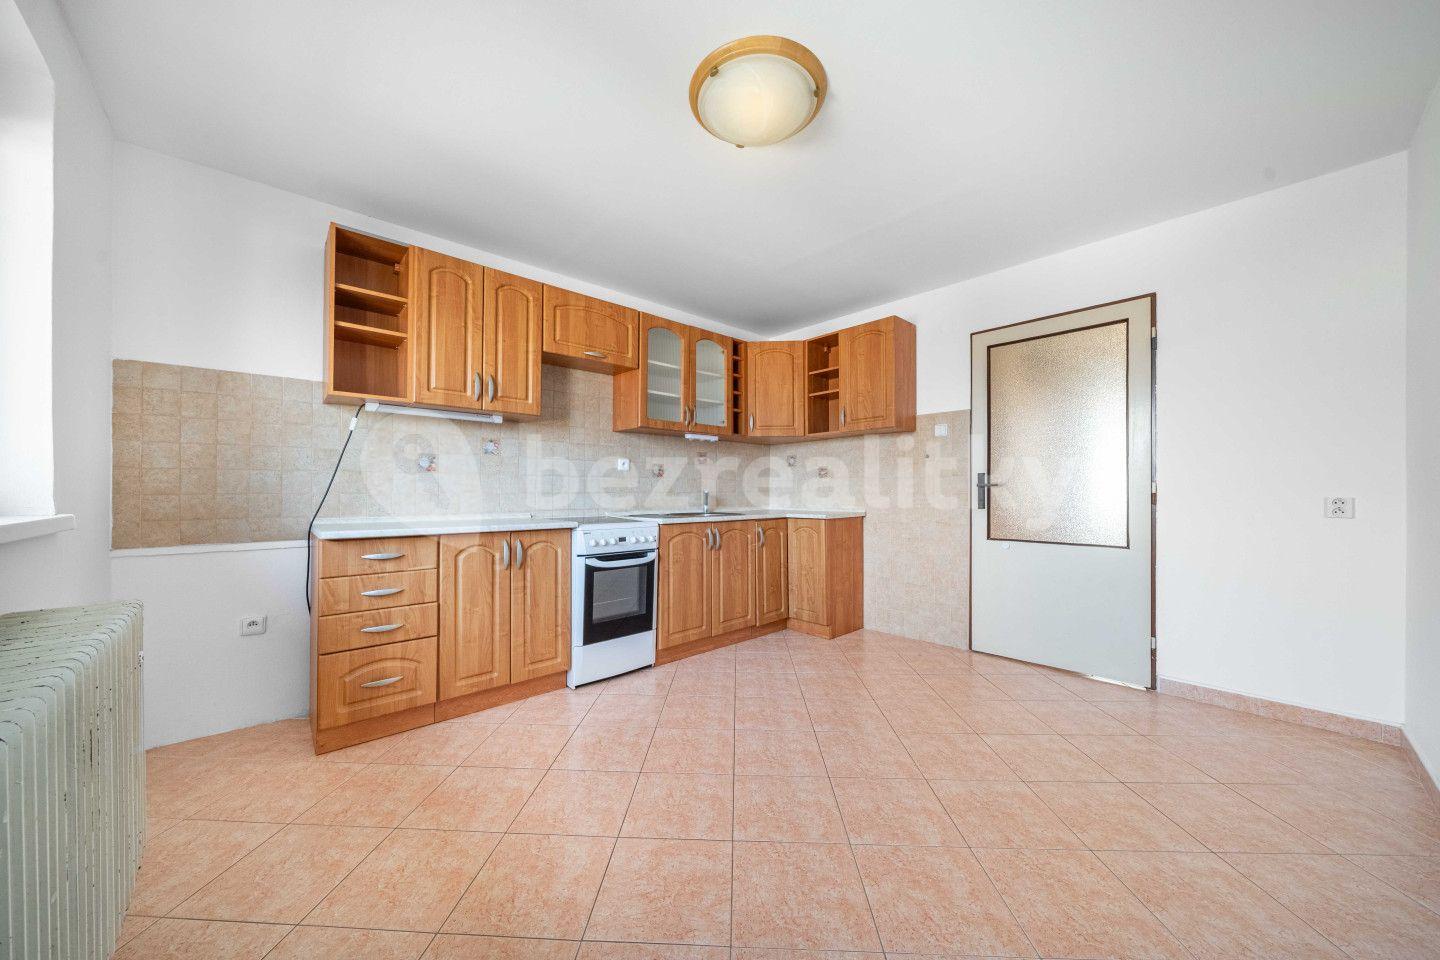 2 bedroom flat for sale, 69 m², Rejchova, Chudenice, Plzeňský Region